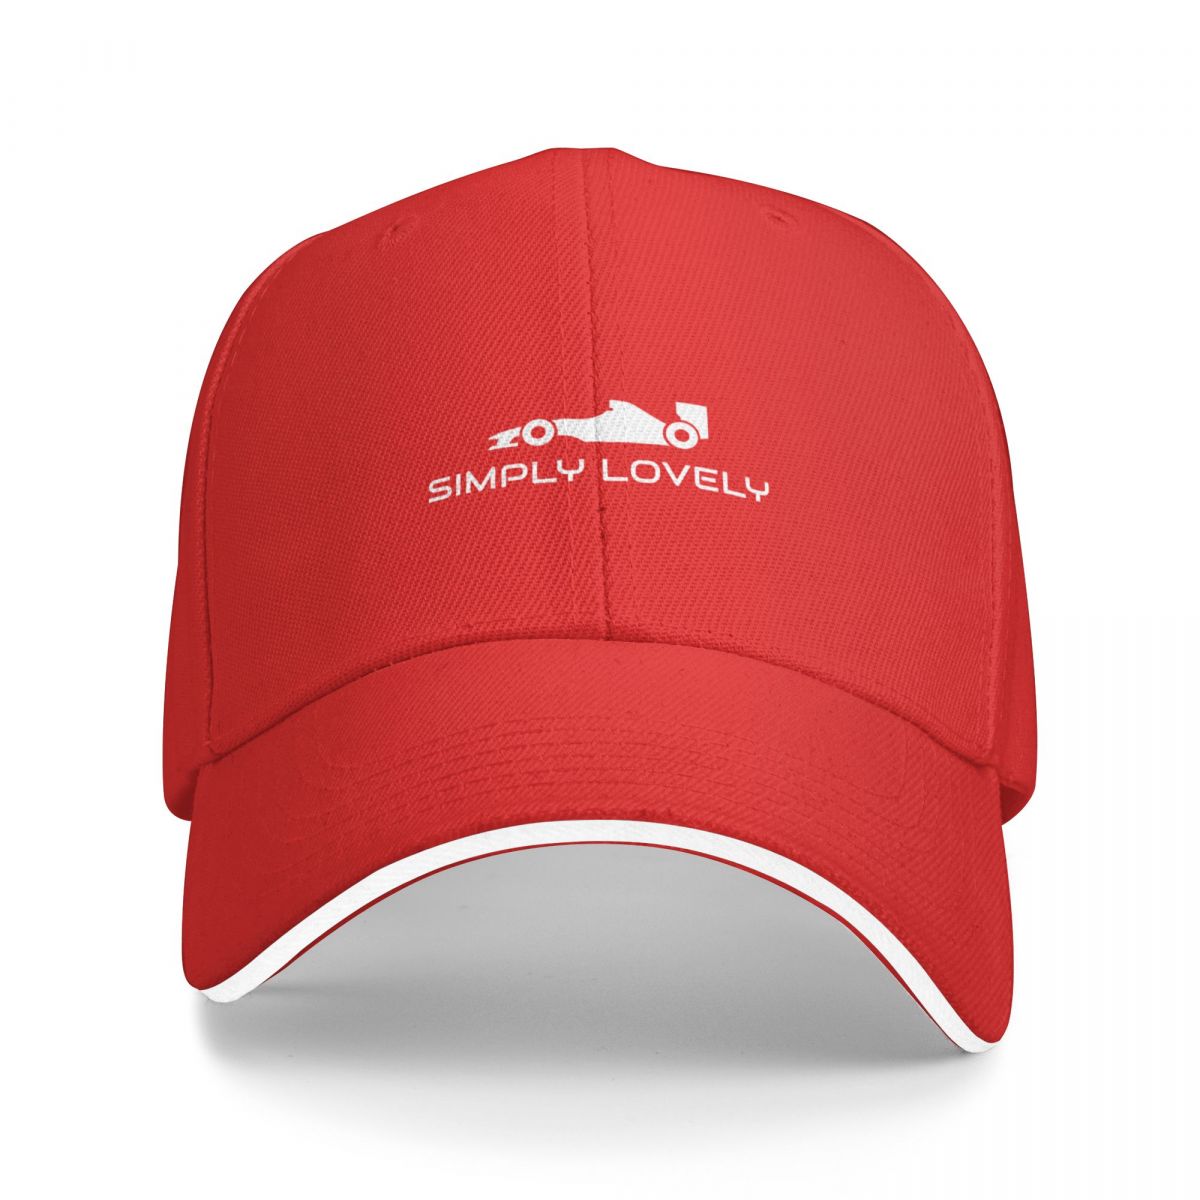 F1 RedBull Star Drive "Simply Lovely" Quote Max Baseball Cap Unisex Fan Merchandise